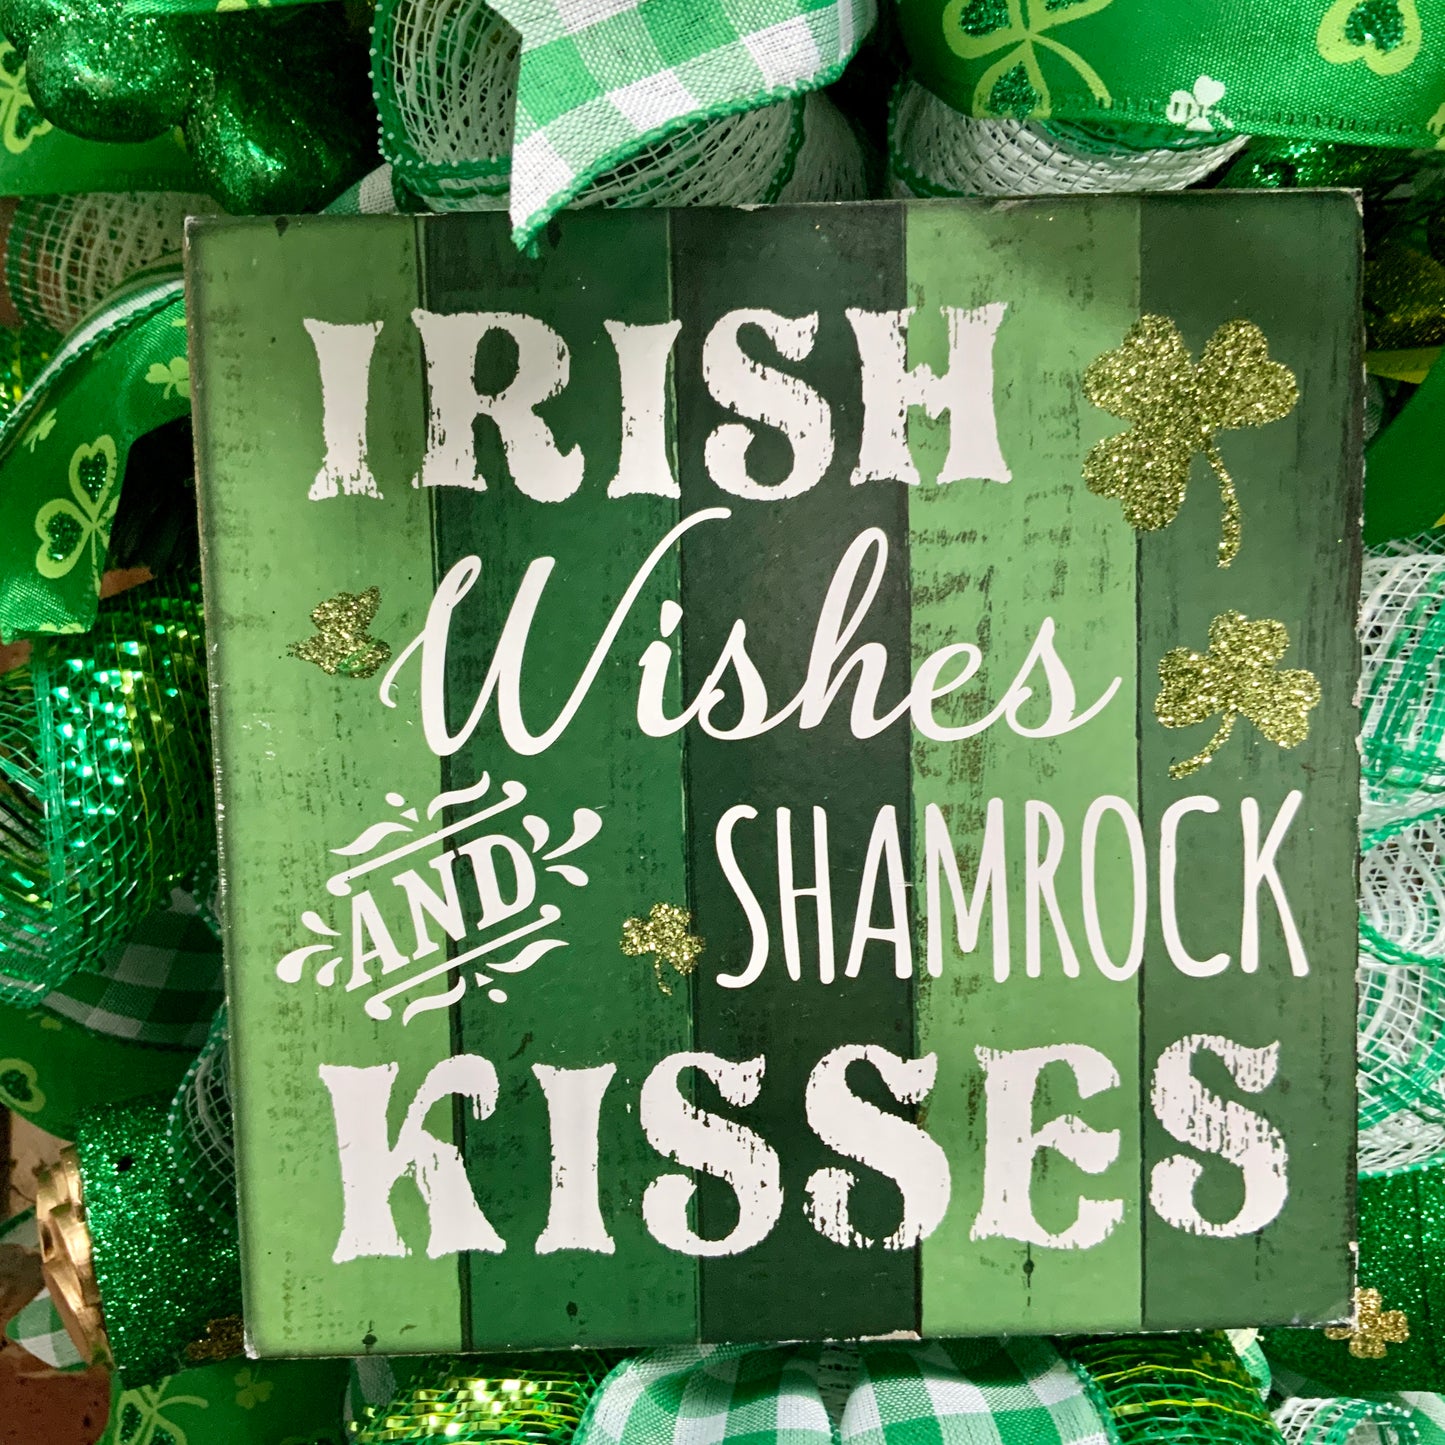 Irish Snoopy Wreath, Irish Door Hanger, Shamrock Wreath, Irish Blessing Wreath For Front Door, St Patrick's Day Wreath